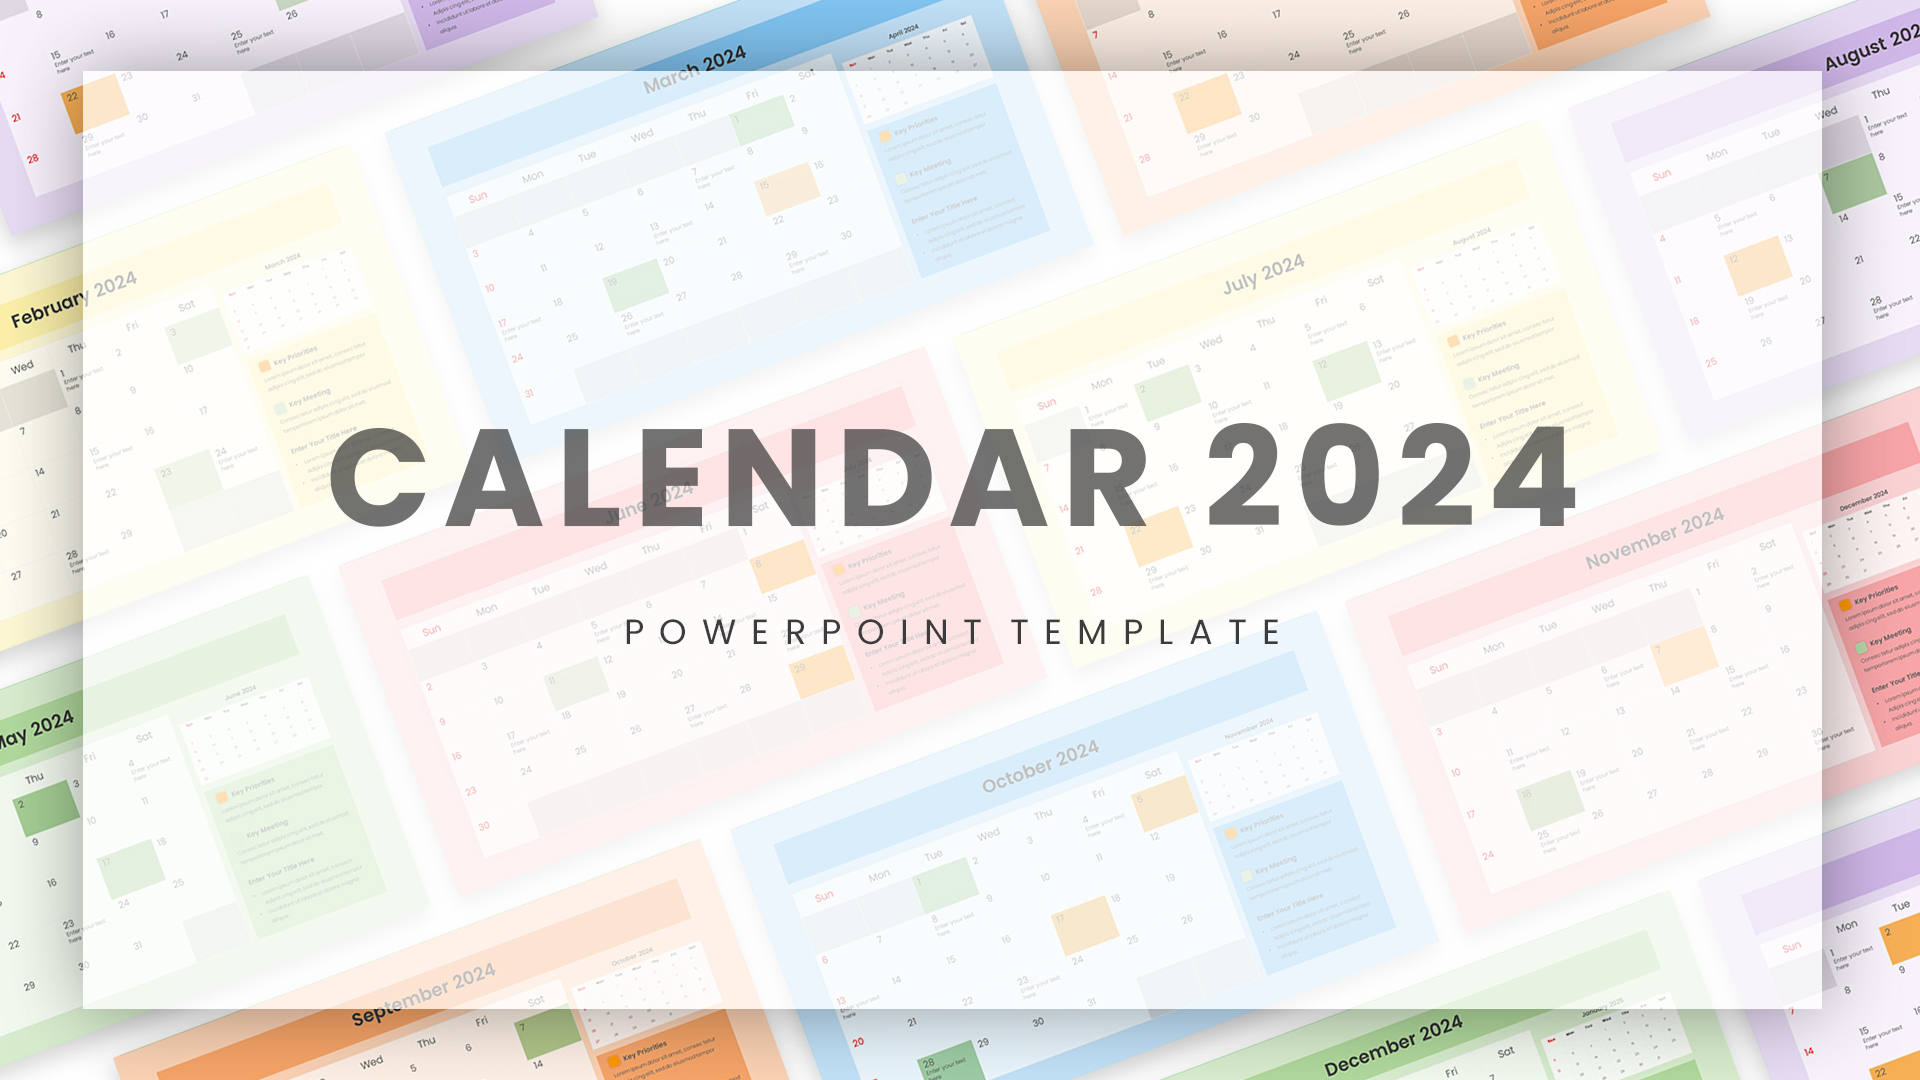 Powerpoint Calendar Template 2024 Free Roda Virgie